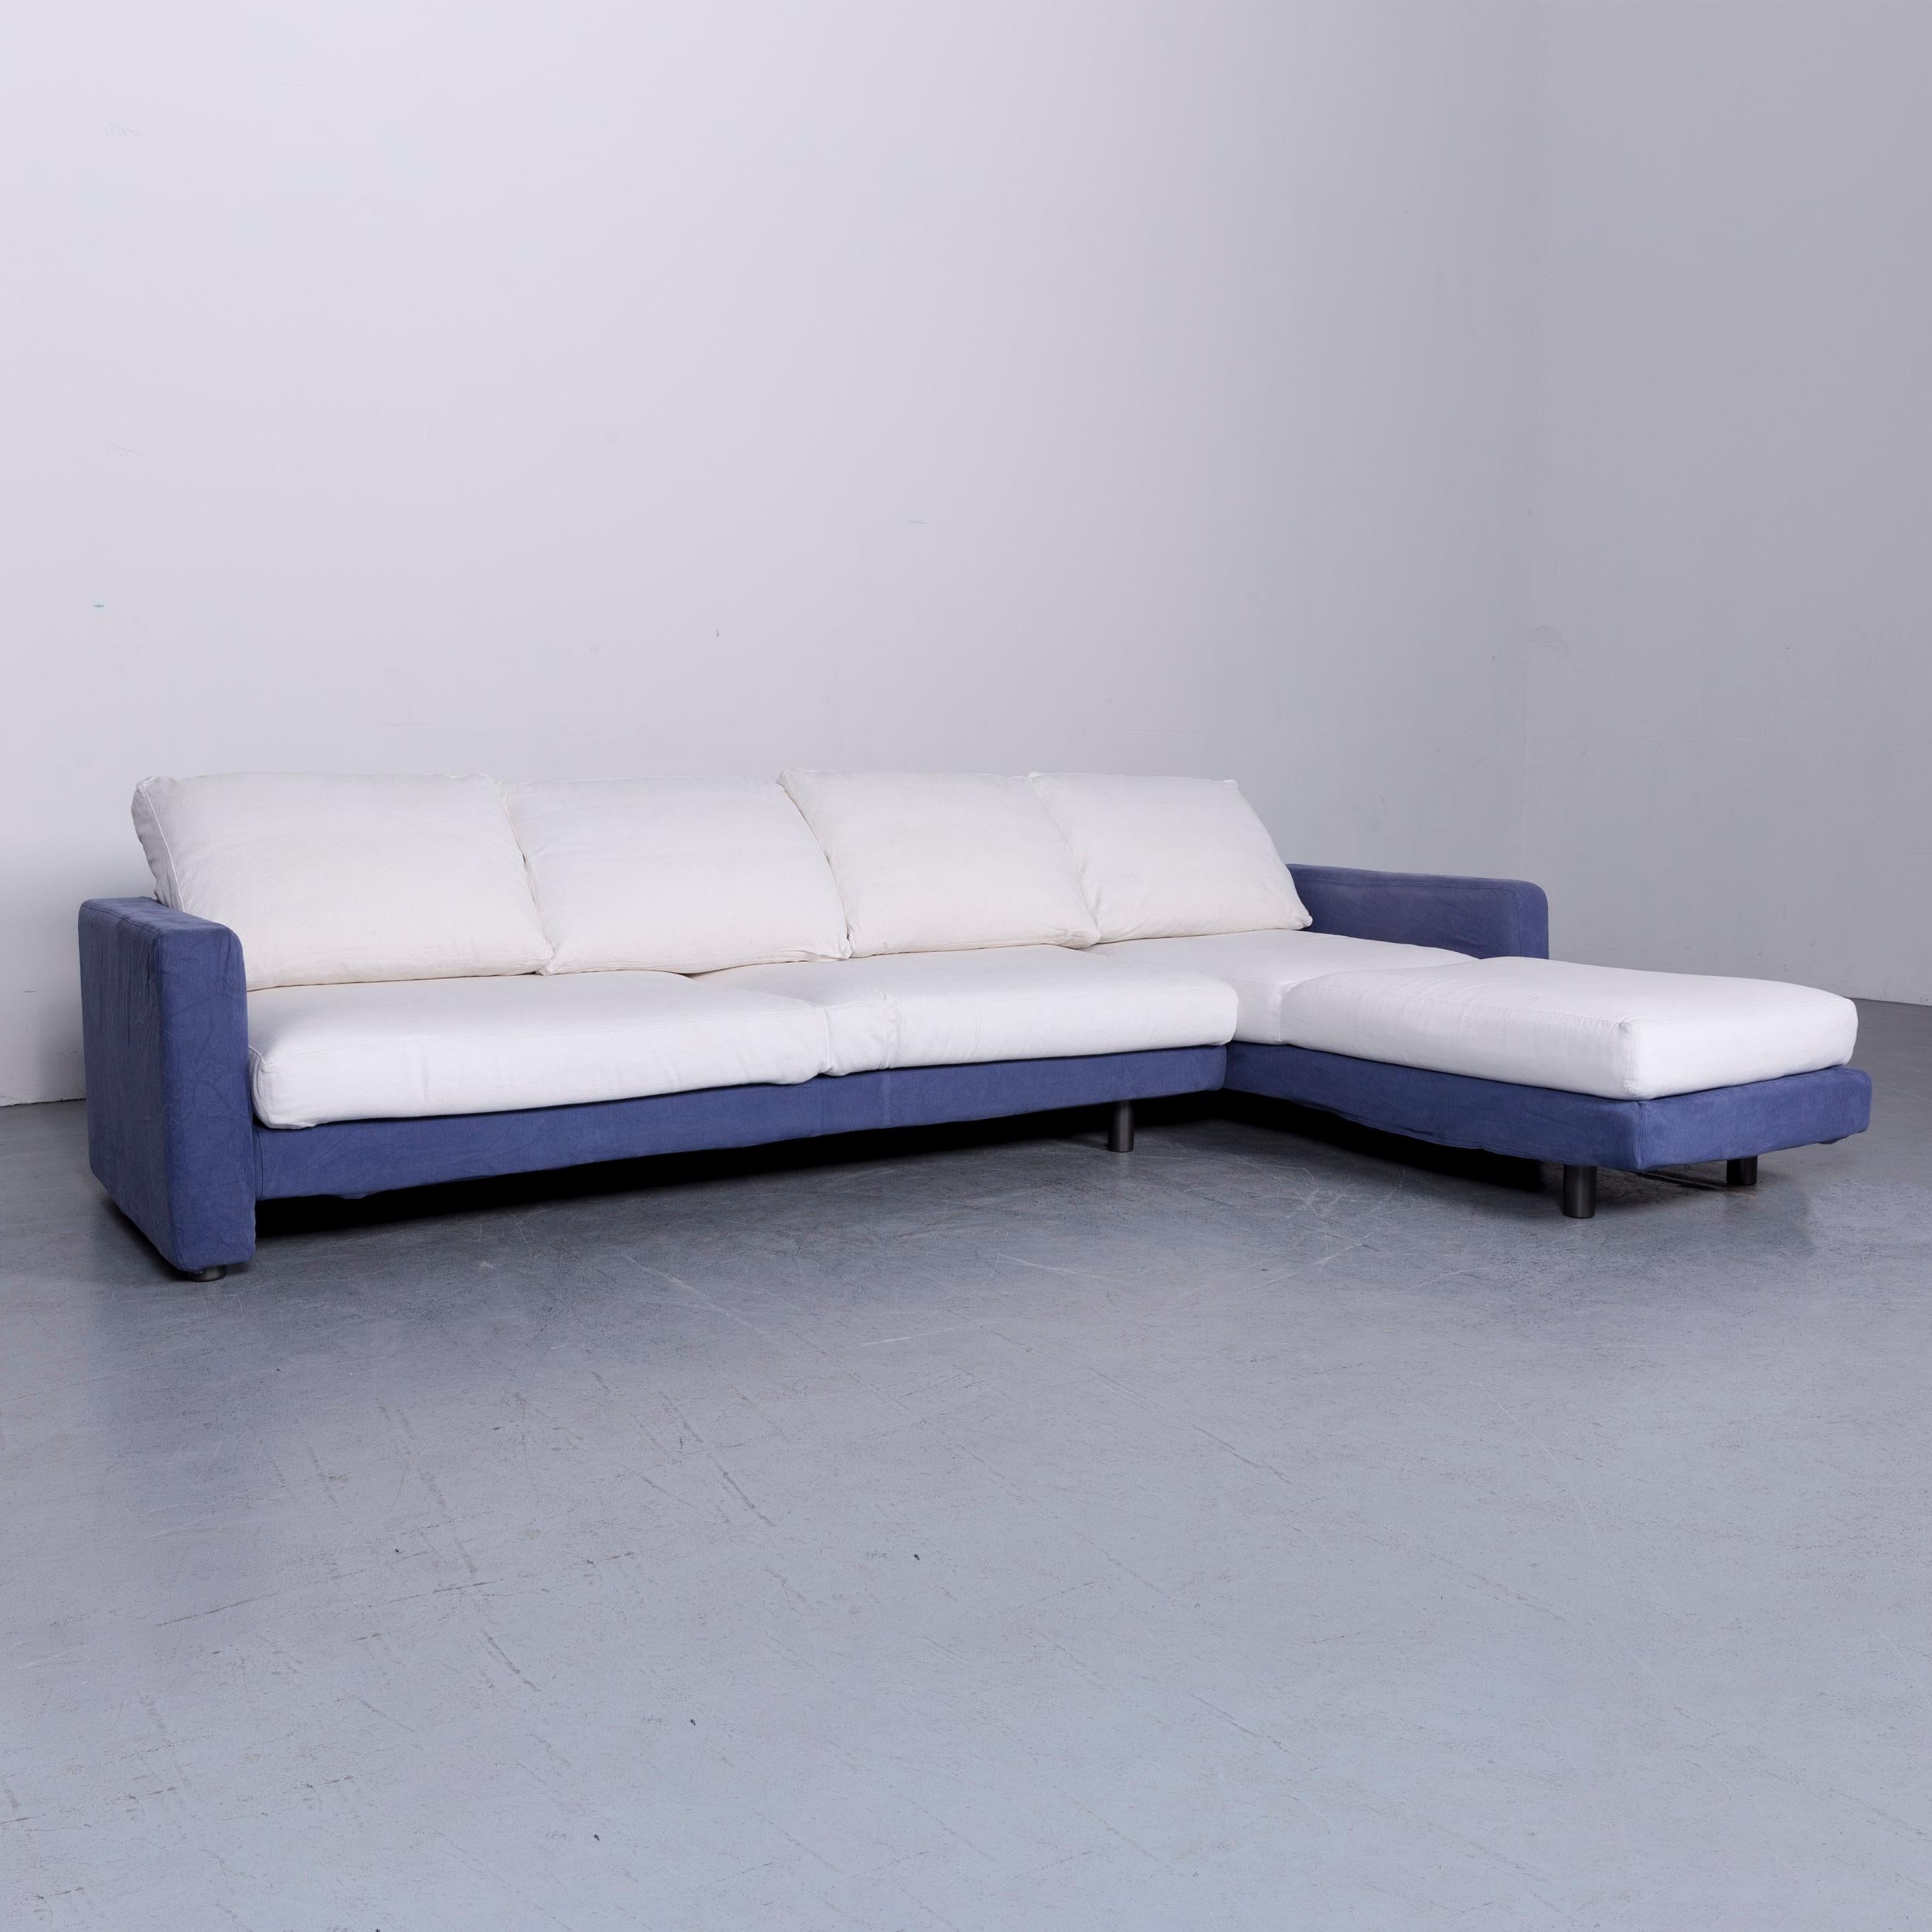 We bring to you a Dema designer fabric sofa white blue corner sofa couch.